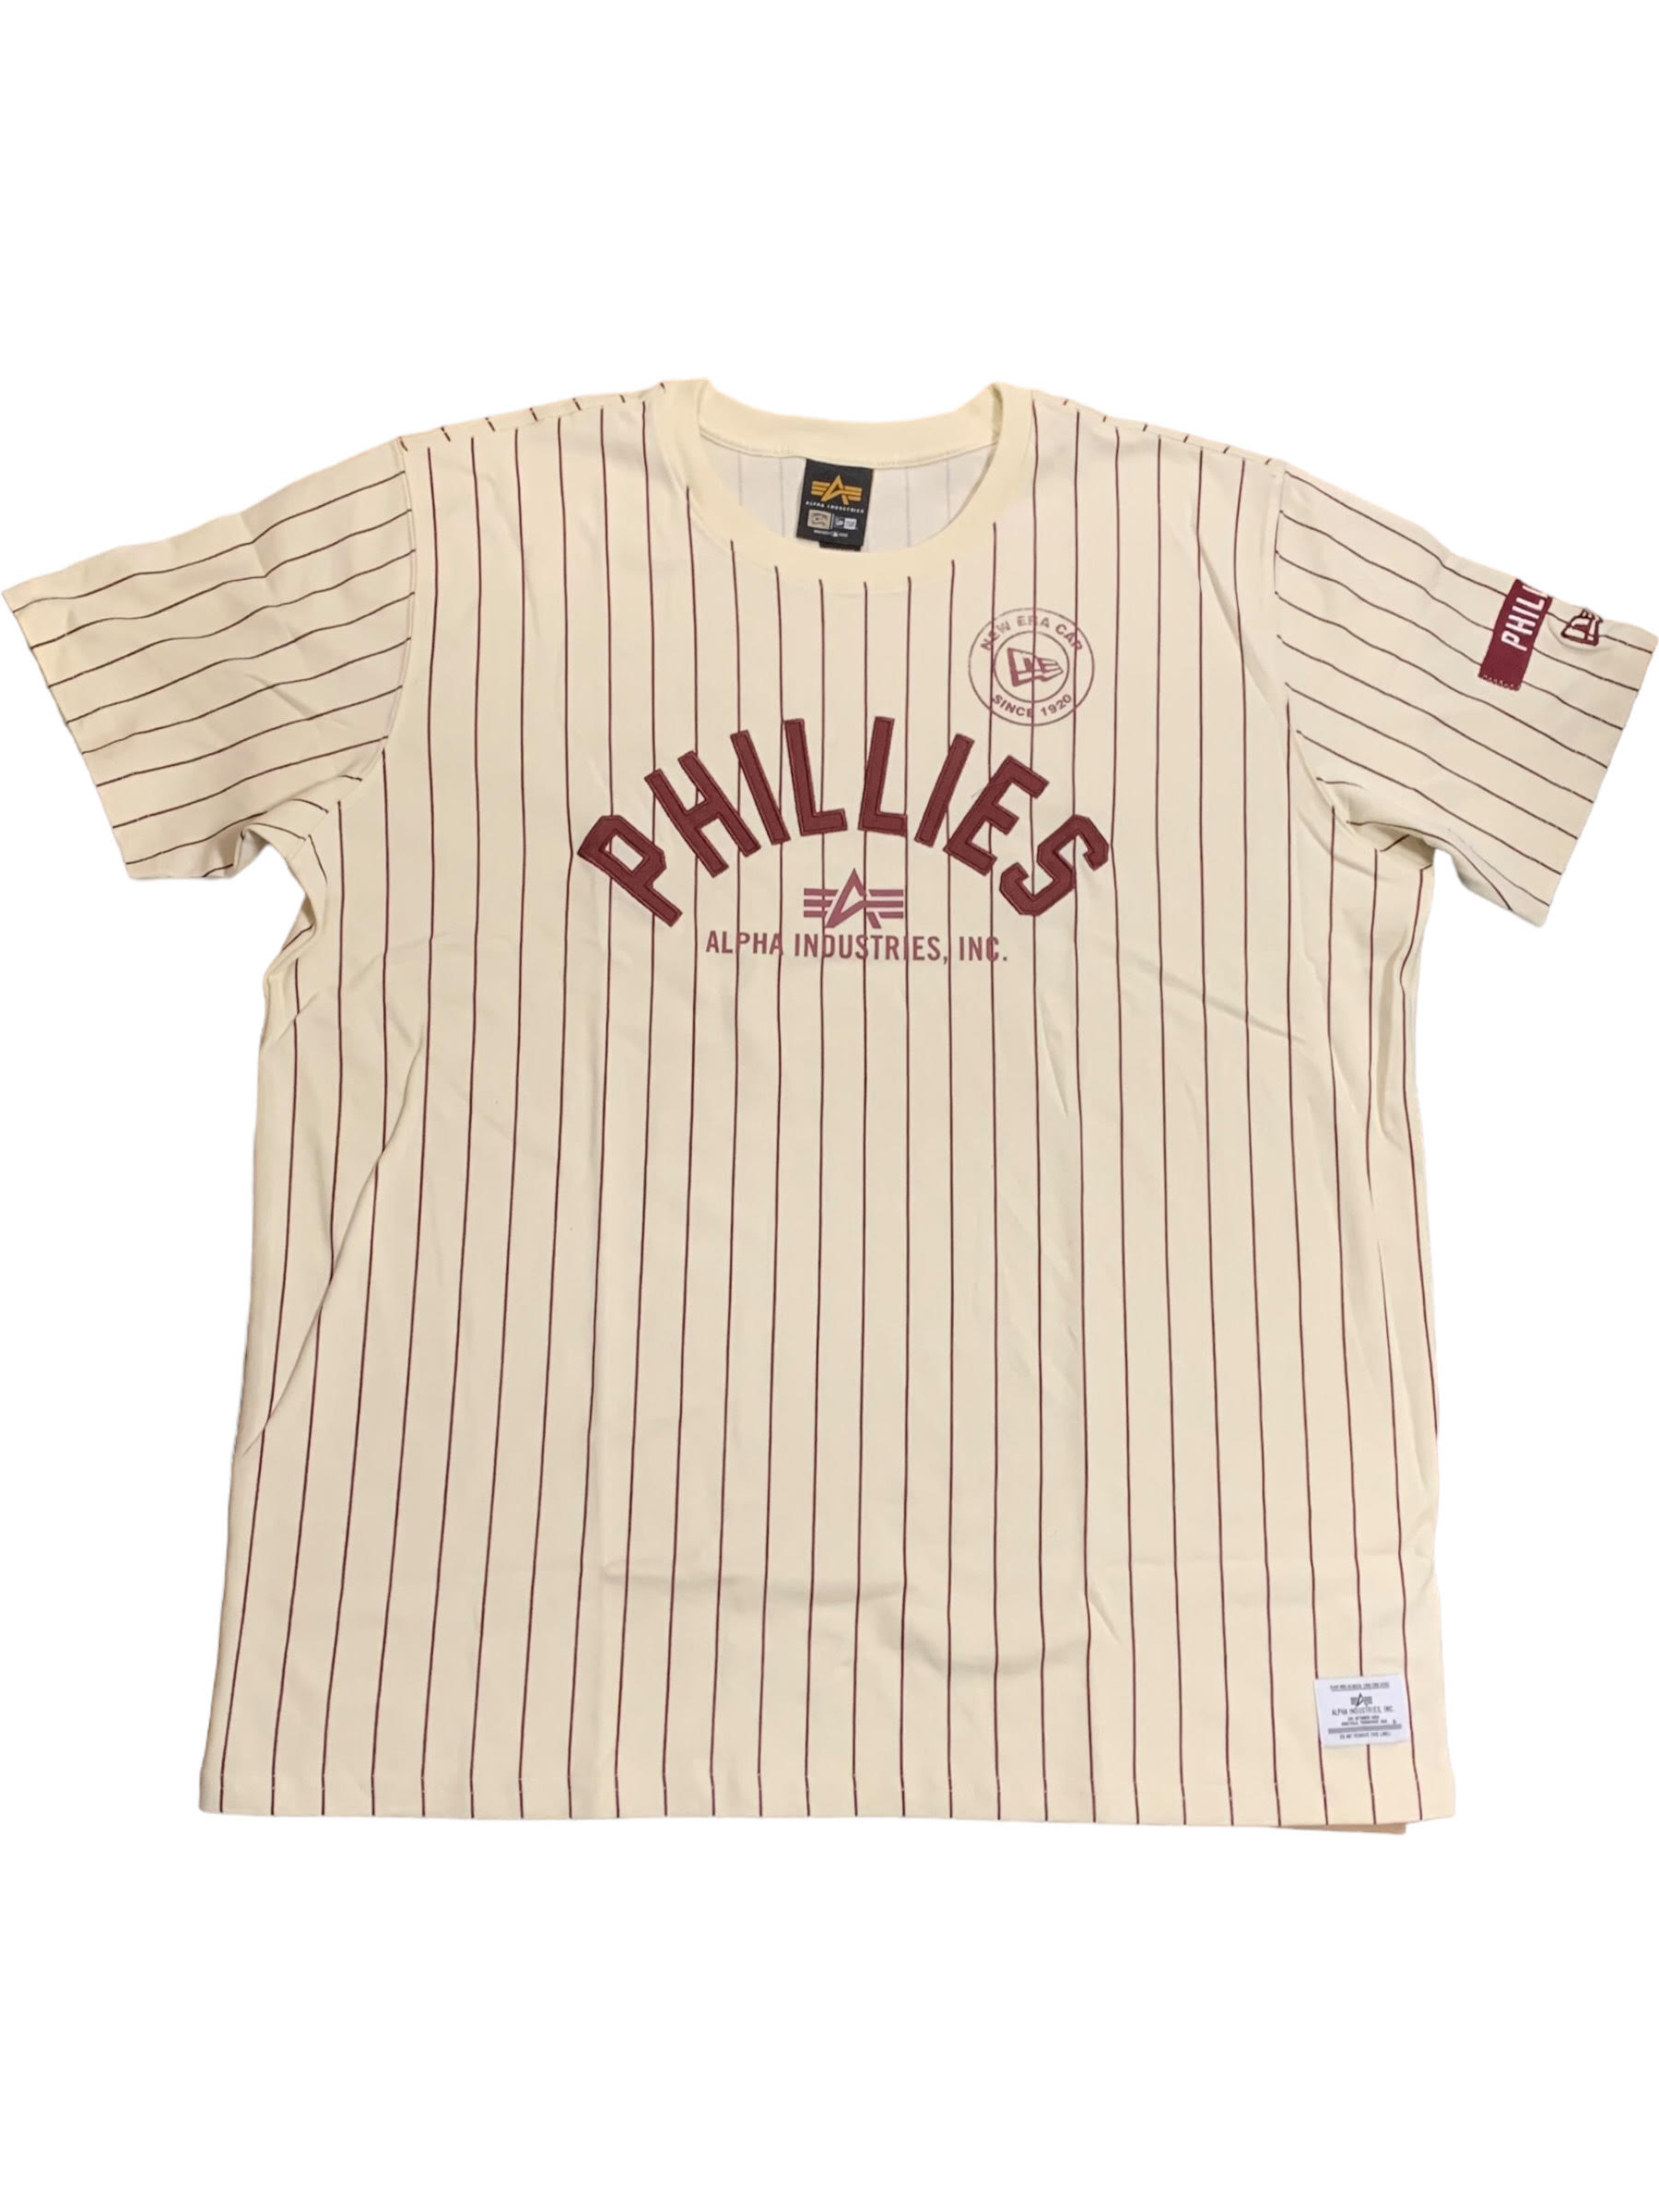 Philadelphia Phillies T-Shirts, Phillies Tees, Philadelphia Phillies Shirts